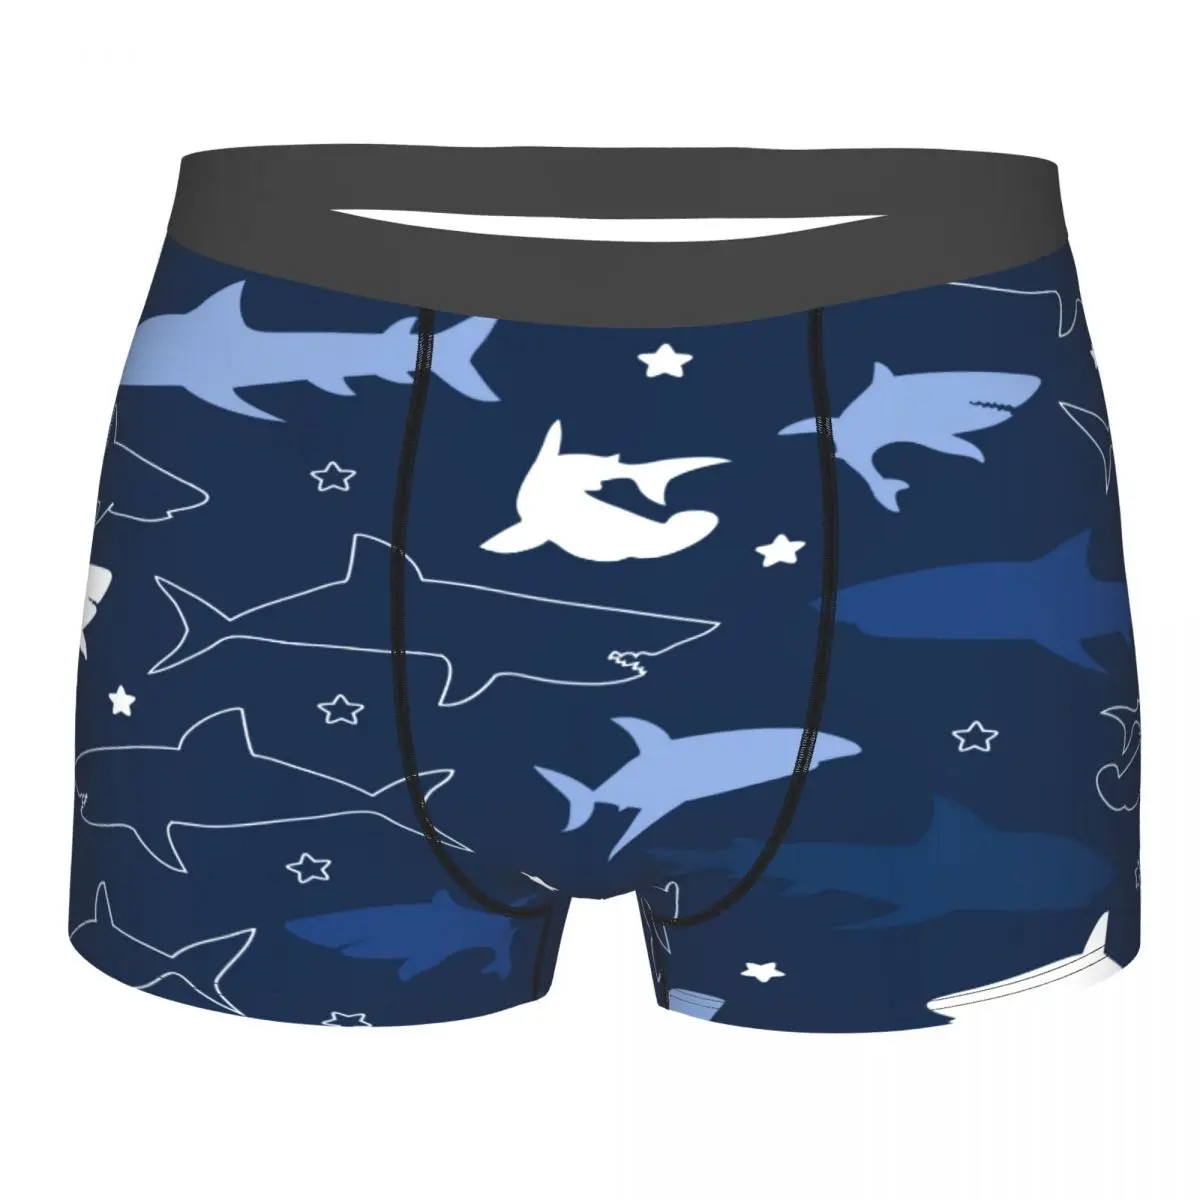 Underwear Men Boxers Navy Shark Illustration Sexy Boxer Underwear Male Panties Underpants Boxershorts Homme